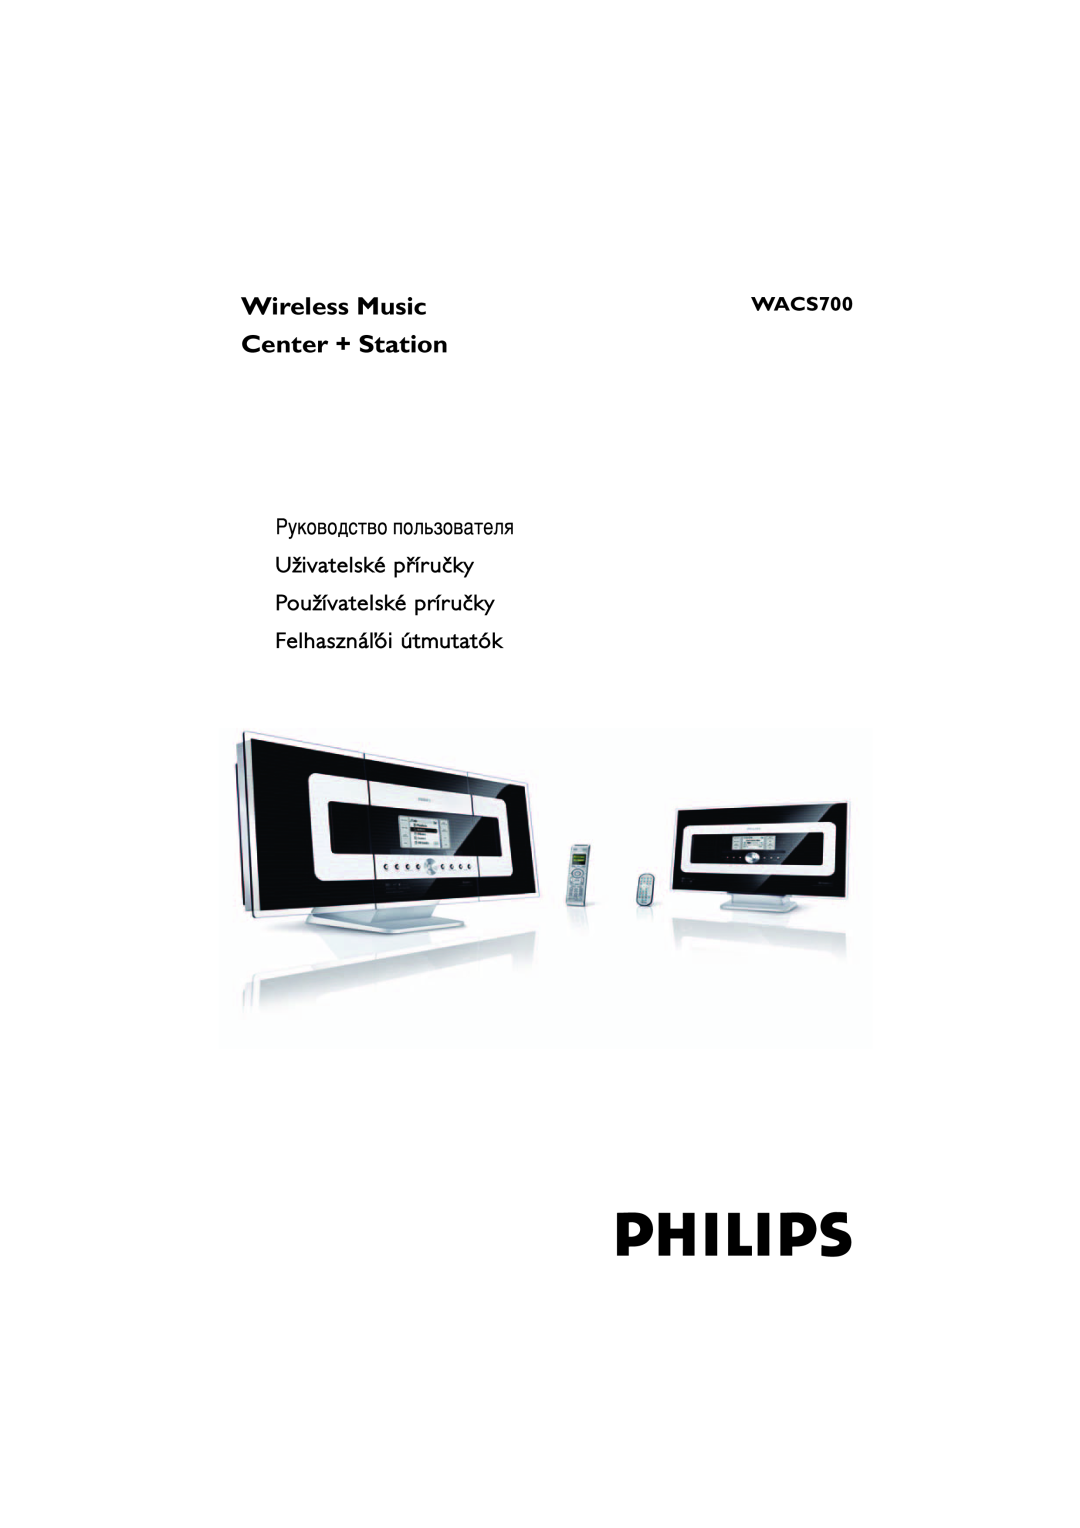 Philips WACS700 manual Wireless Music, Center + Station 